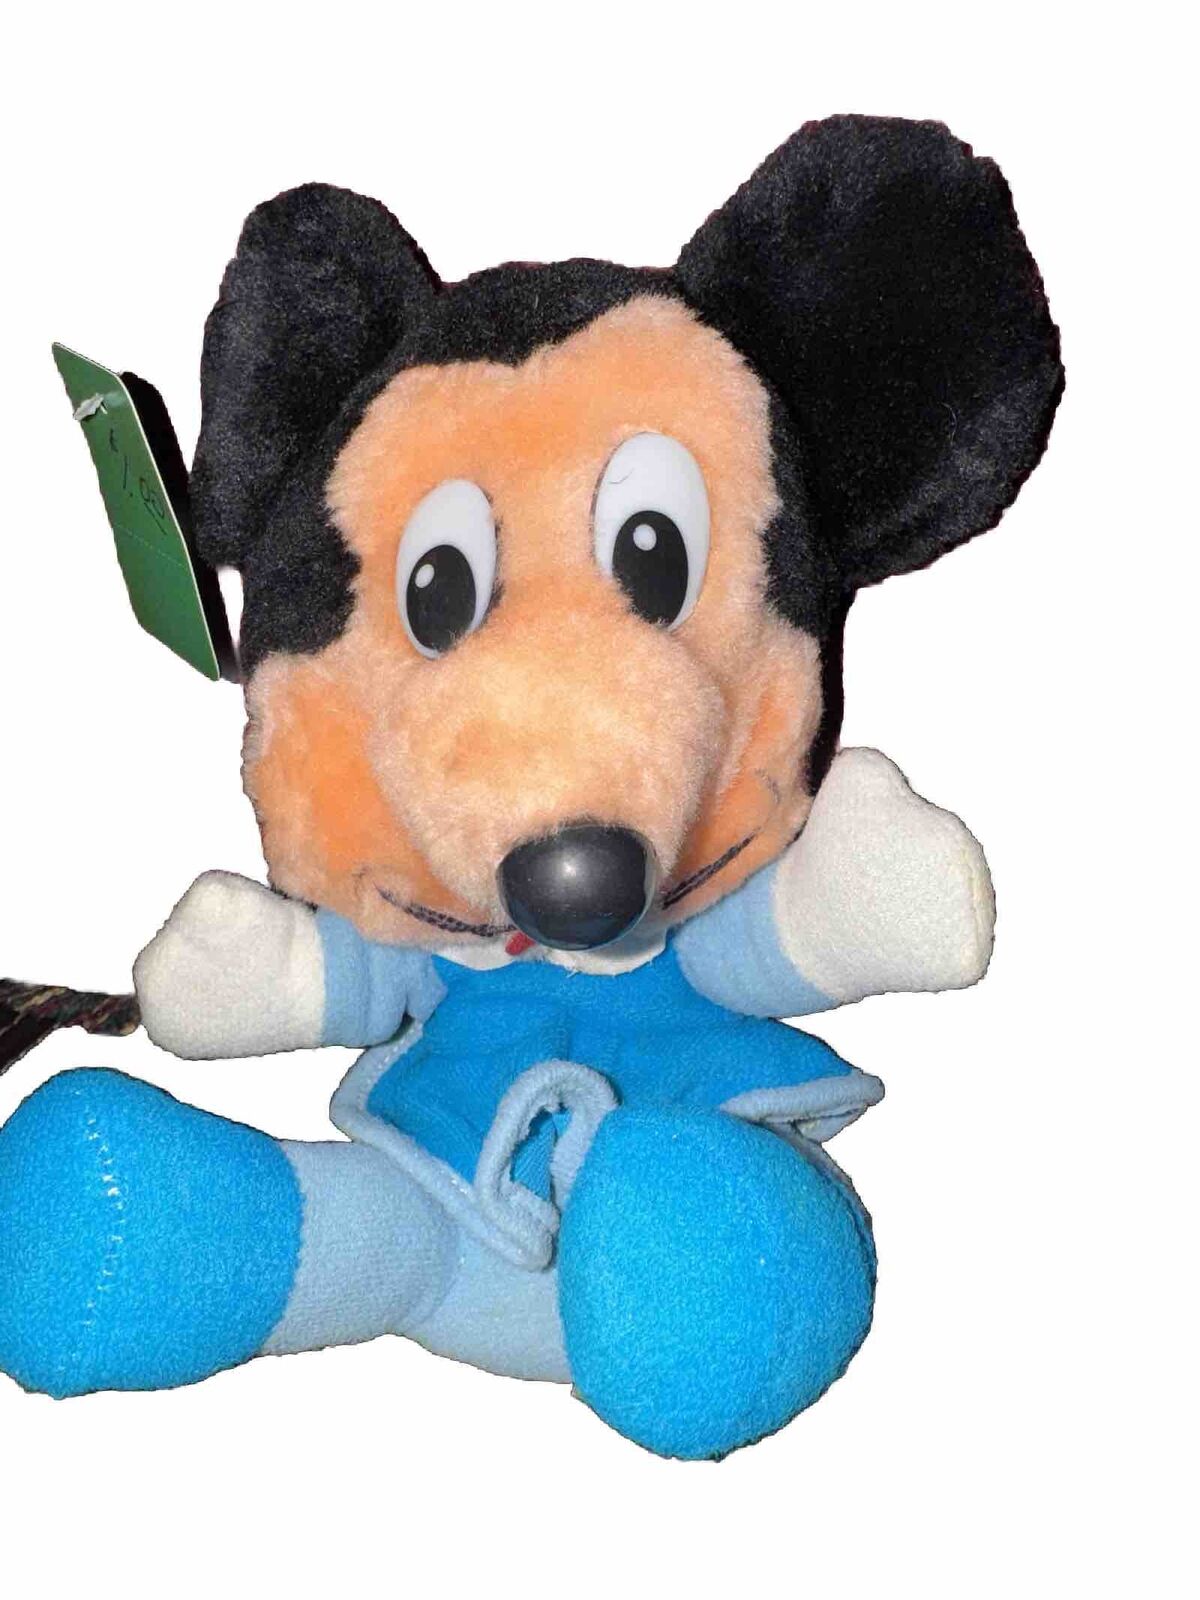 Vintage Disney Mickey's Acme Plush Toy Doll Minnie Mouse